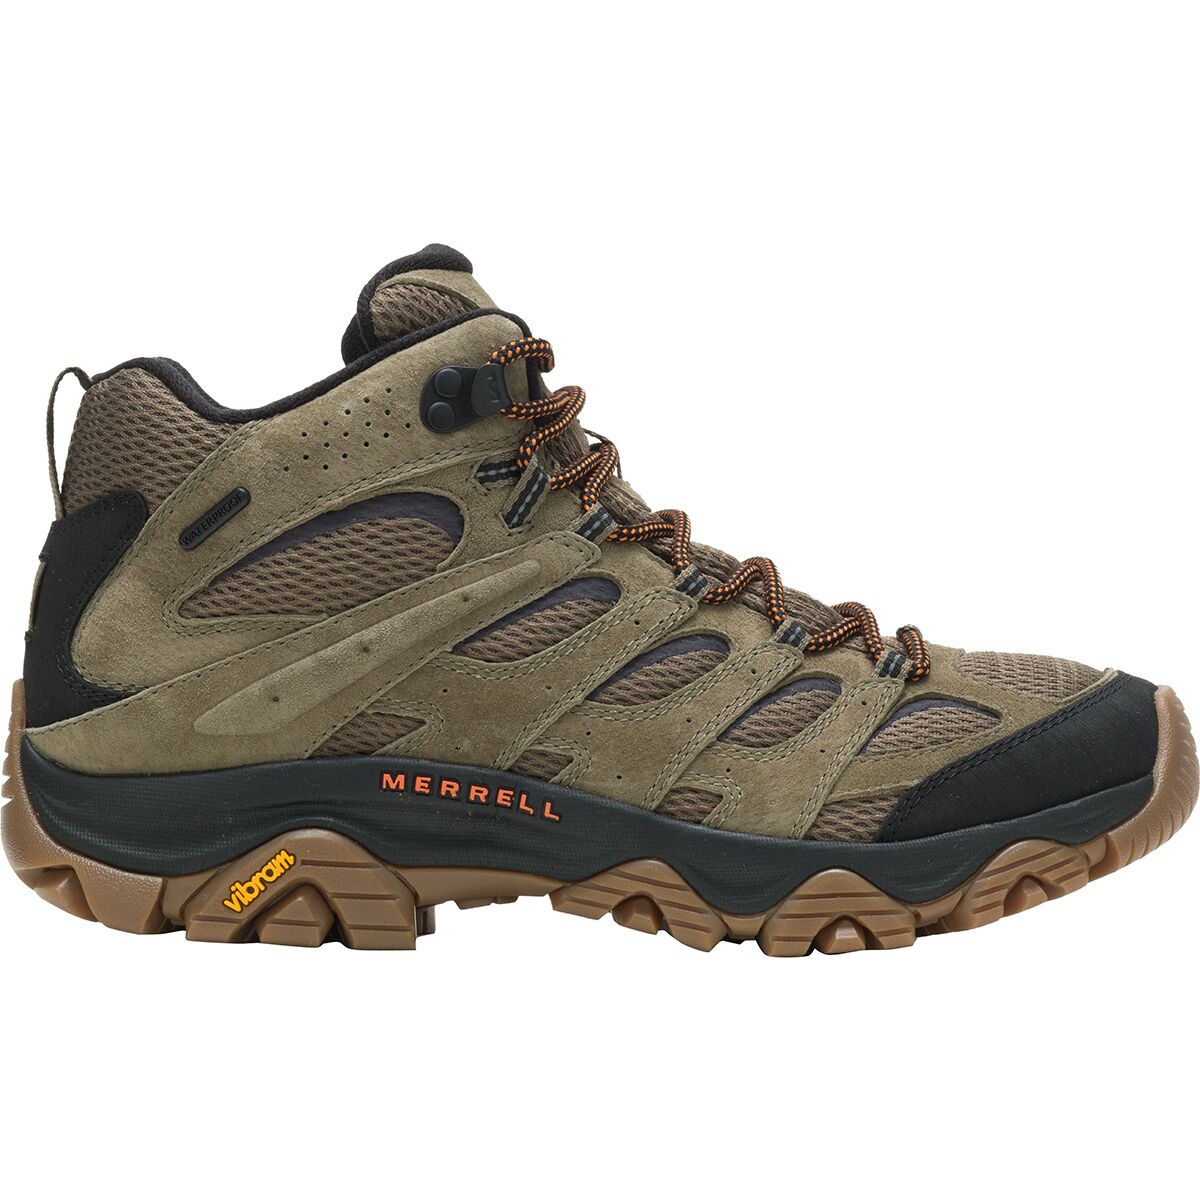 Moab 3 Mid Waterproof Hiking Boot - Men